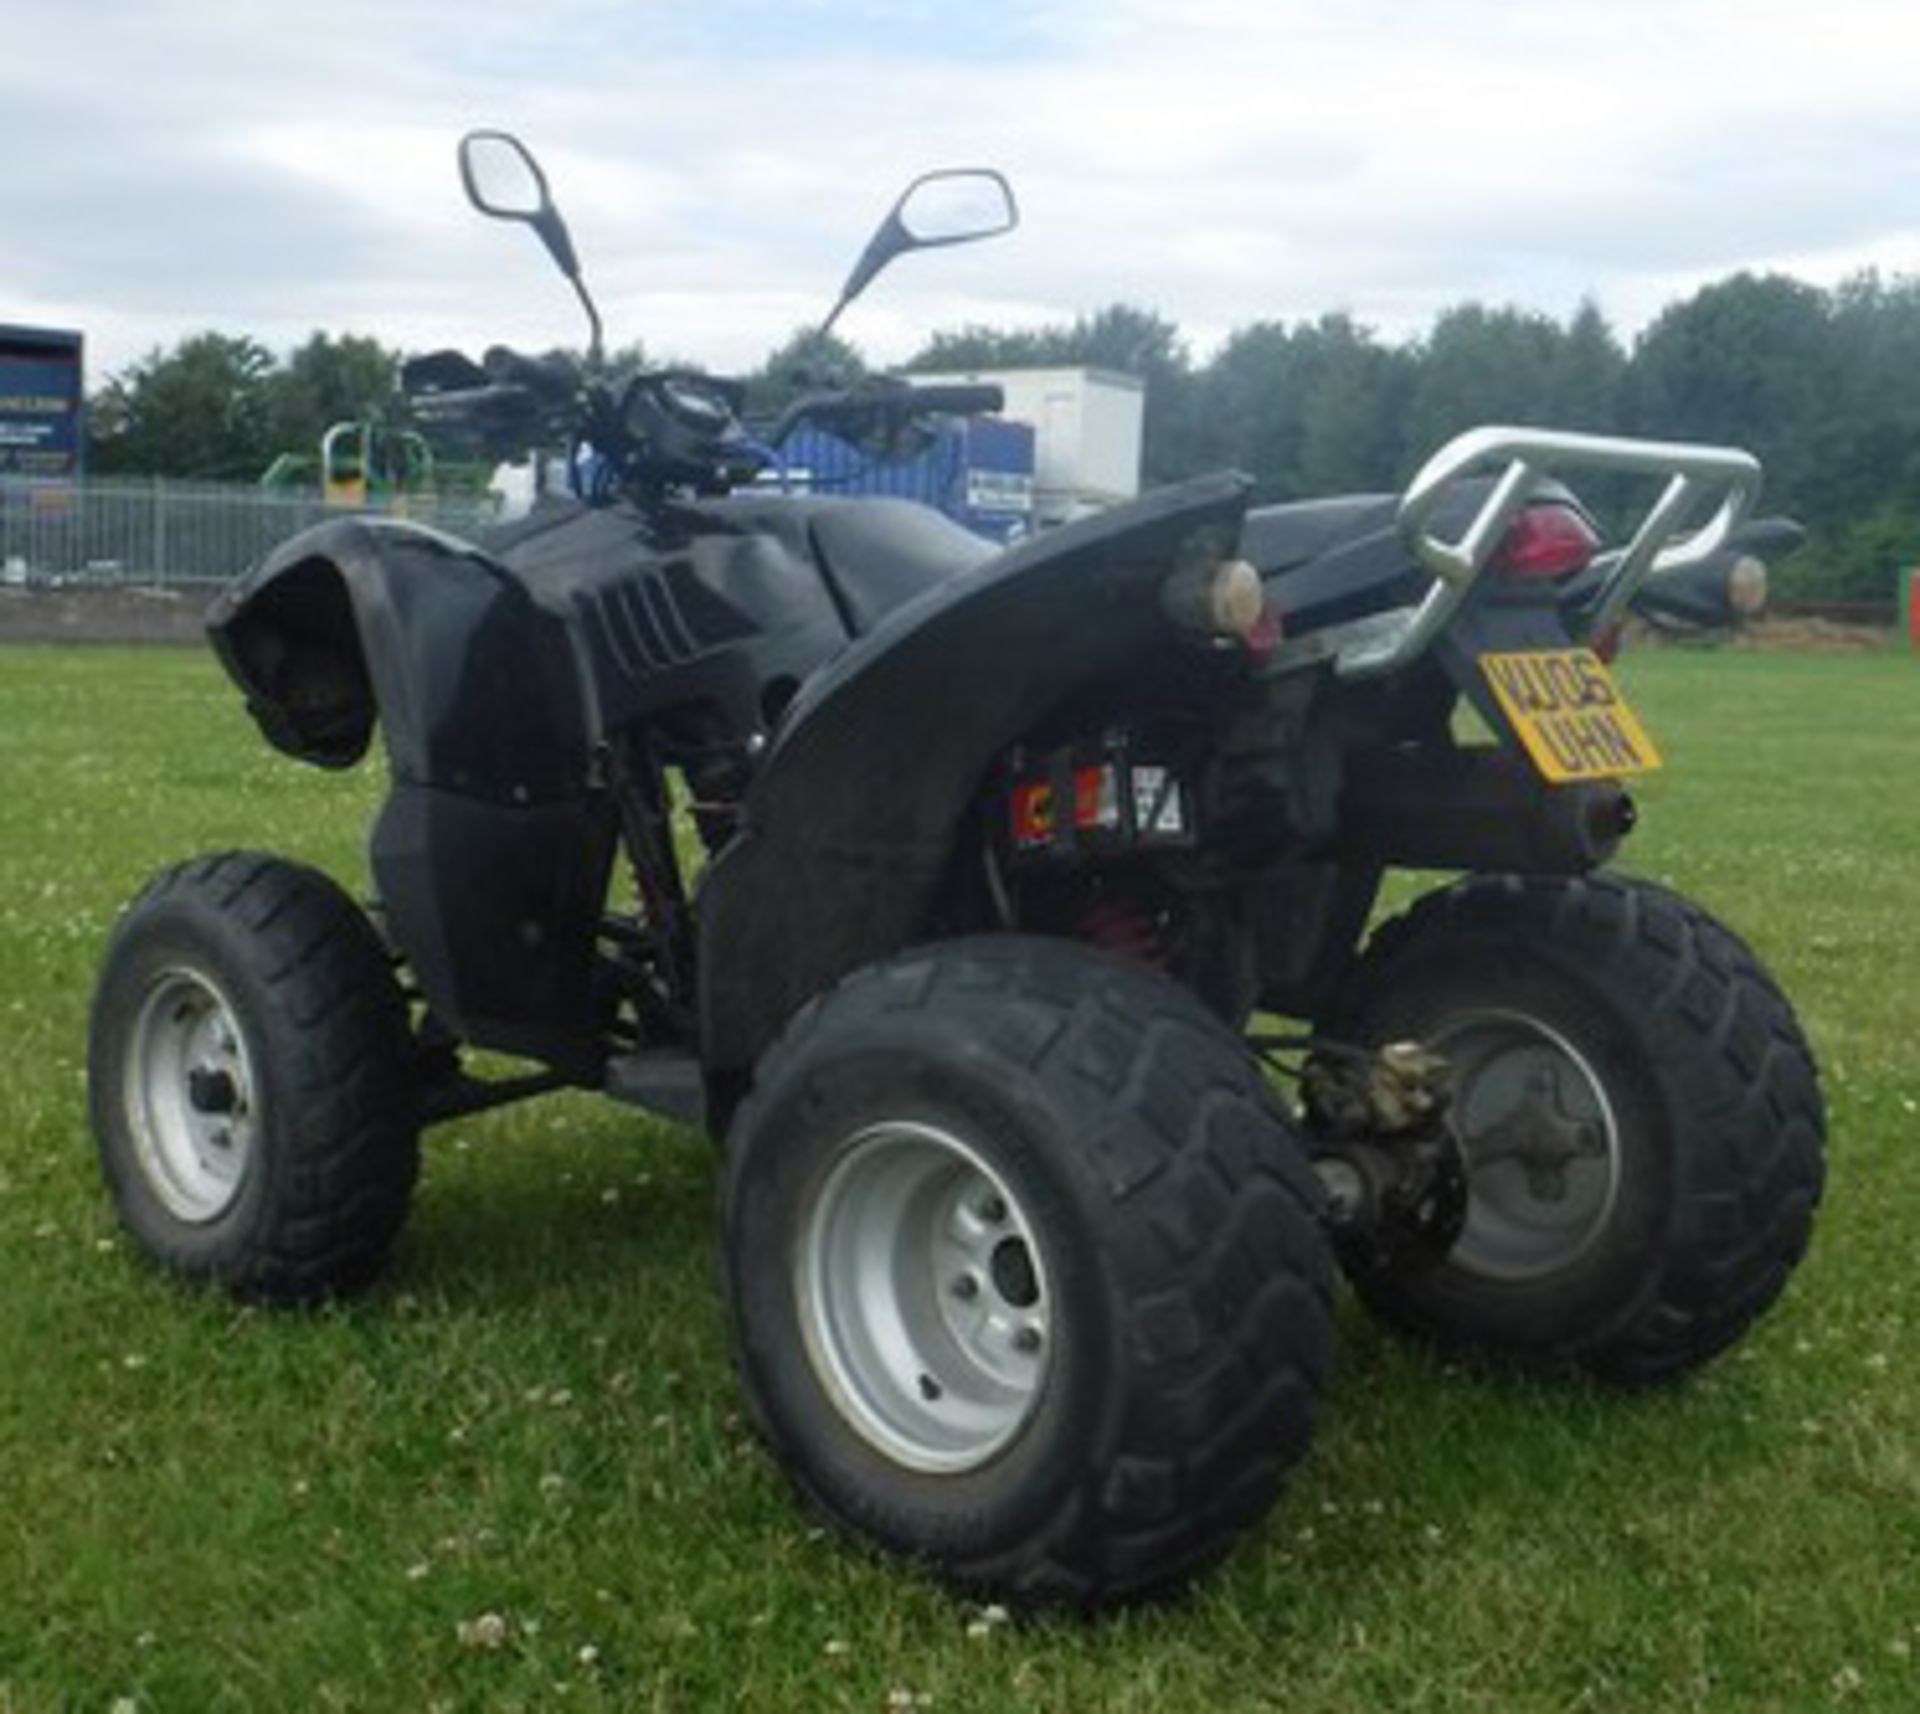 2006 ADLY ATV-3005 Quadzilla 300ES. Reg - VU06UHN. VIN - RFLXH3026A005230. 2 axles. 5419hrs (not ve - Image 9 of 11